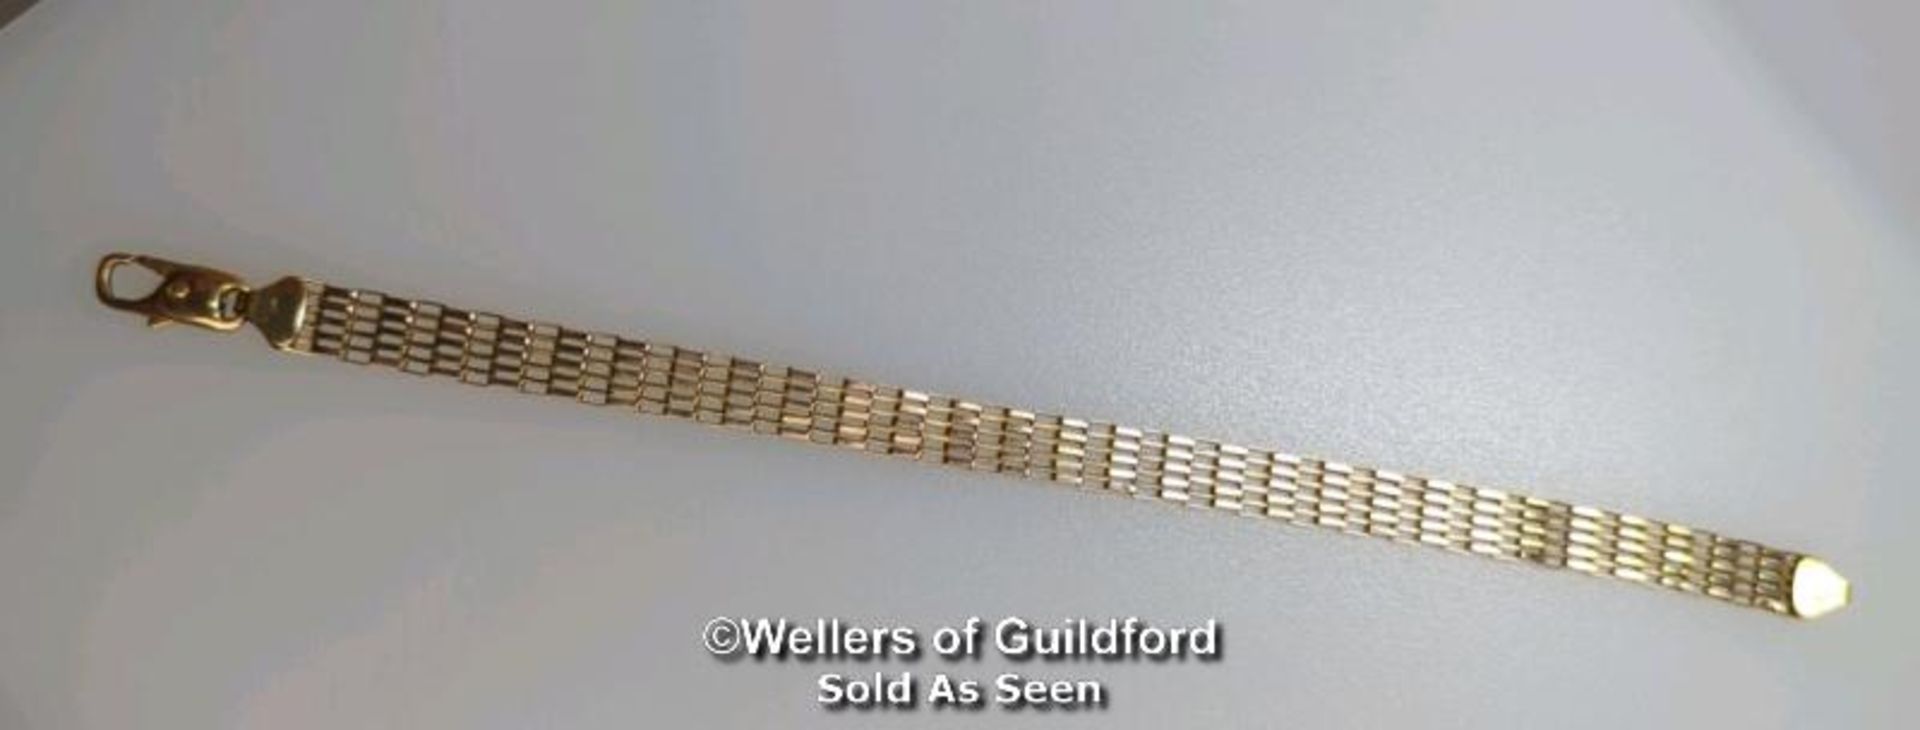 9ct gold hallmarked flexible link bracelet, length 18.5cm, gross weight 6.43g - Image 4 of 5